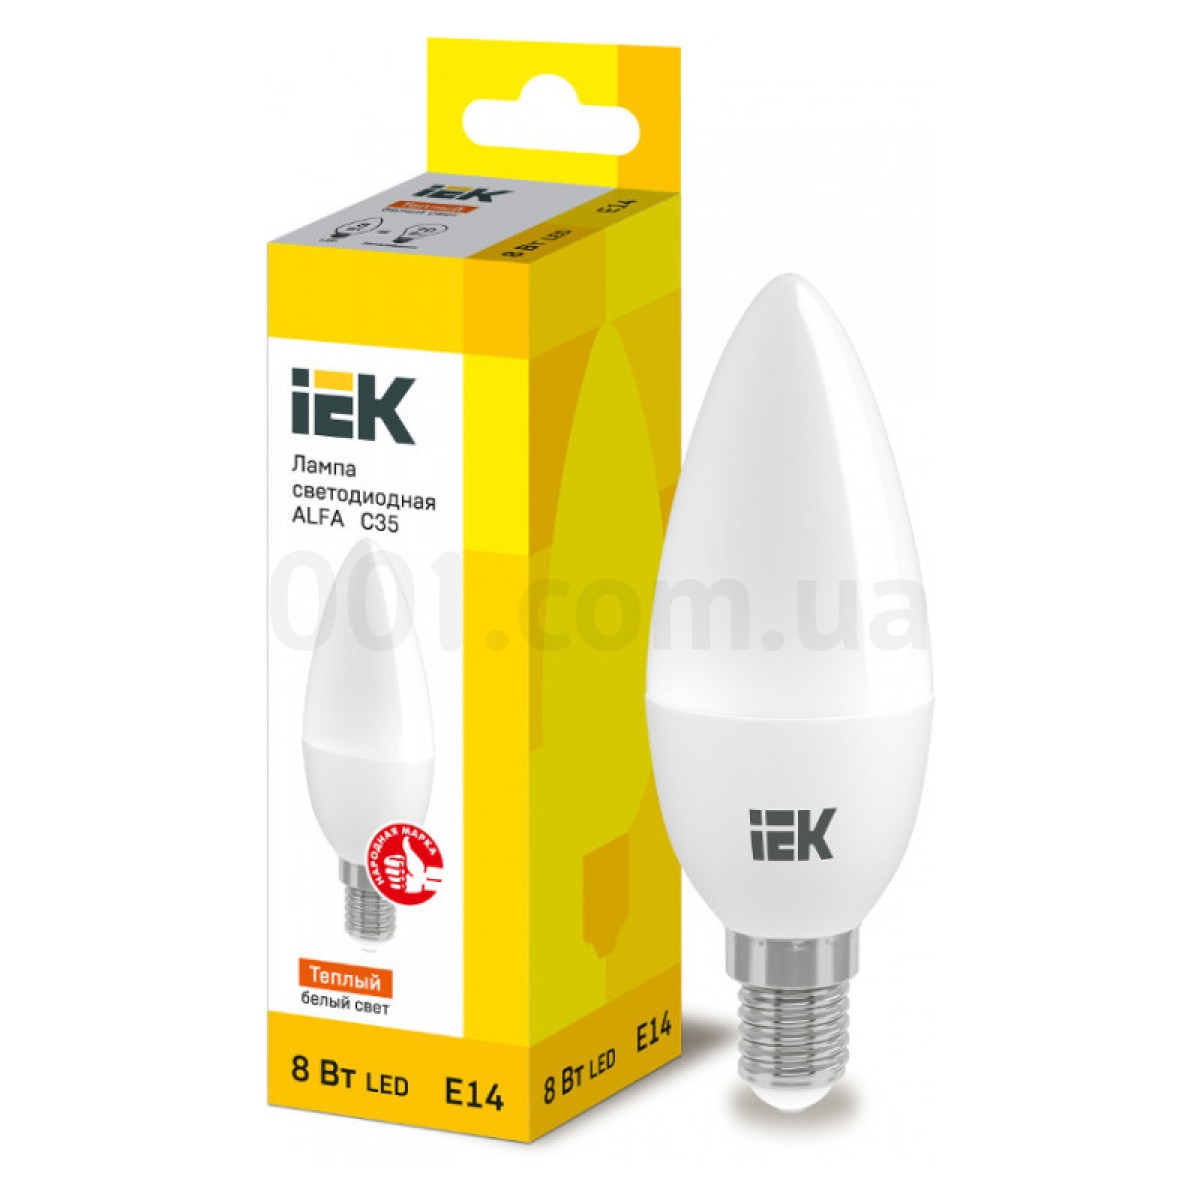 Светодиодная лампа LED ALFA C35 (свеча) 8 Вт 230В 3000К E14, IEK 256_256.jpg